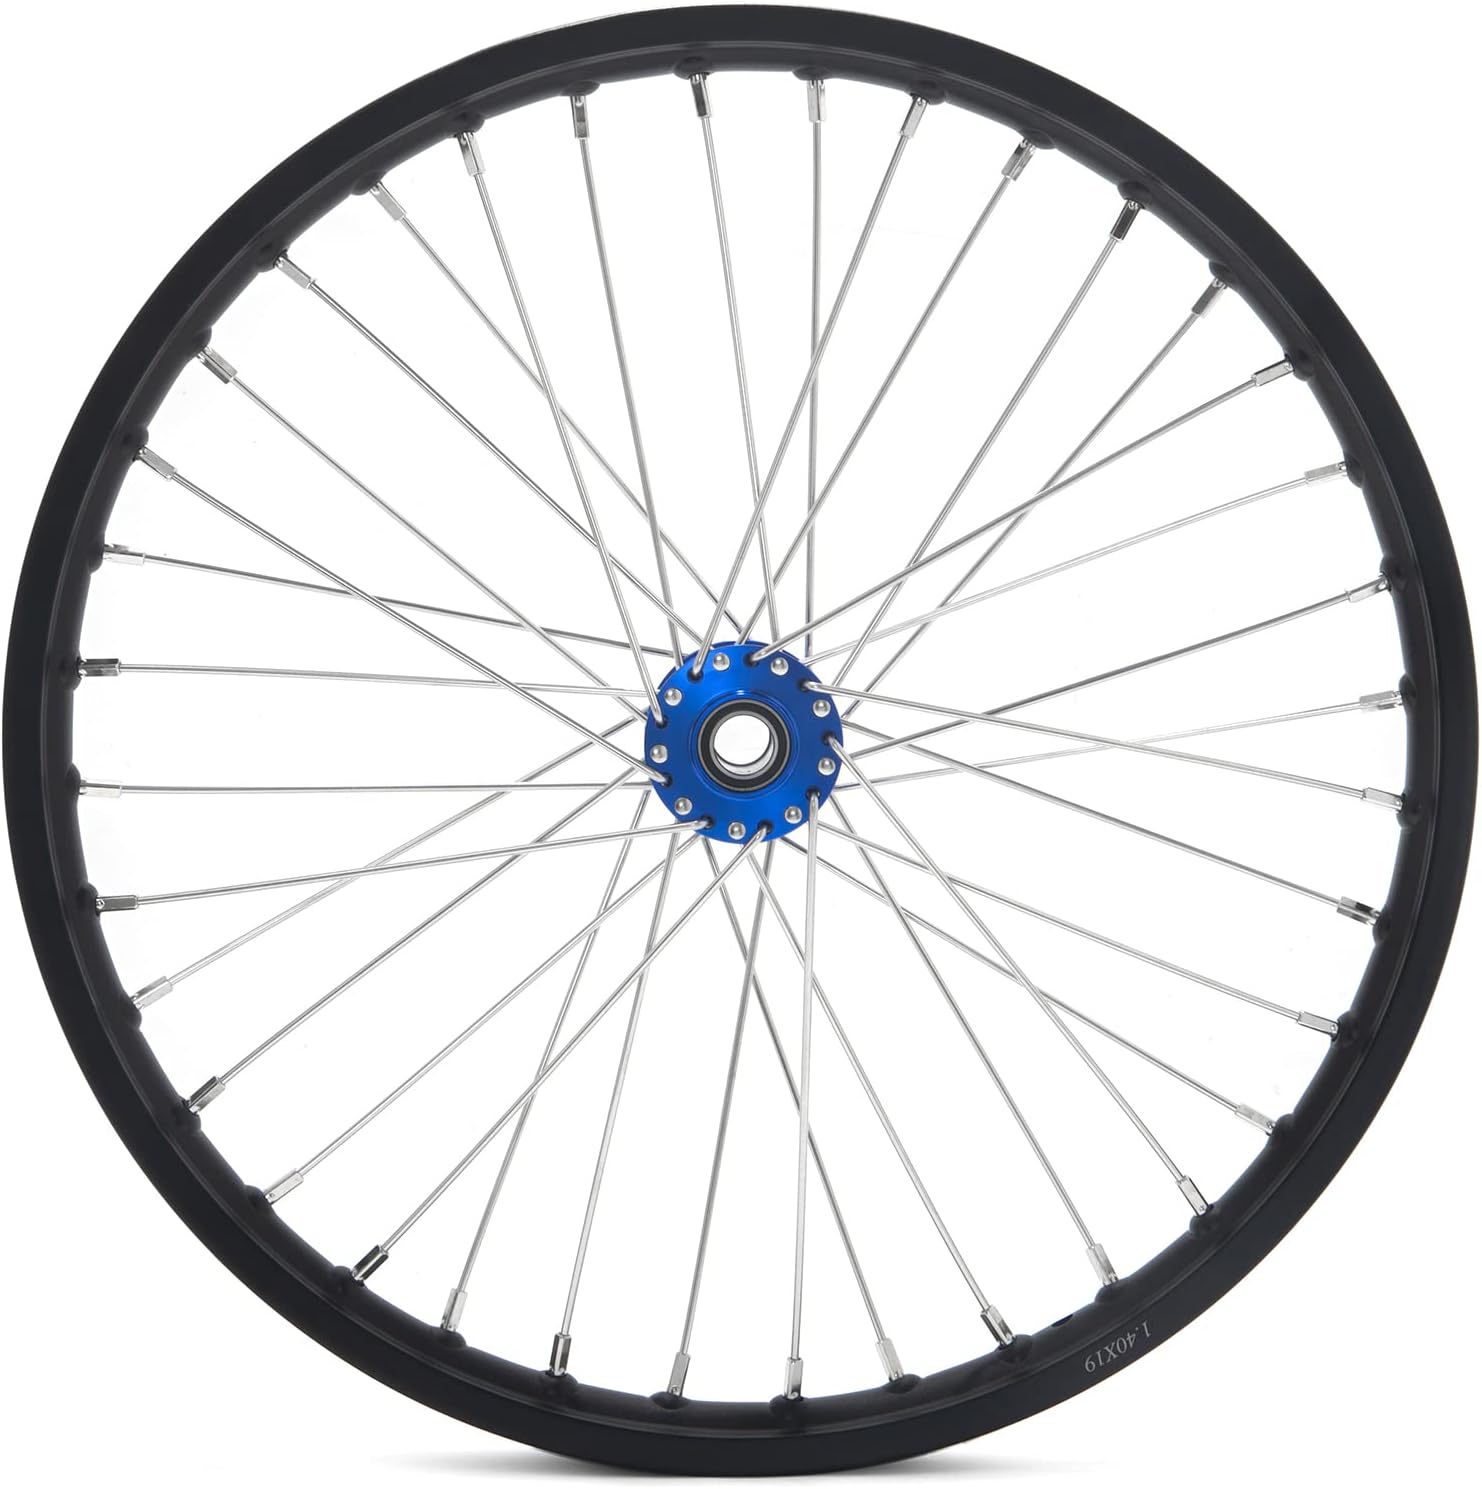 19" x 1.4" Aluminum Front Wheel for Surron / Electric Bike